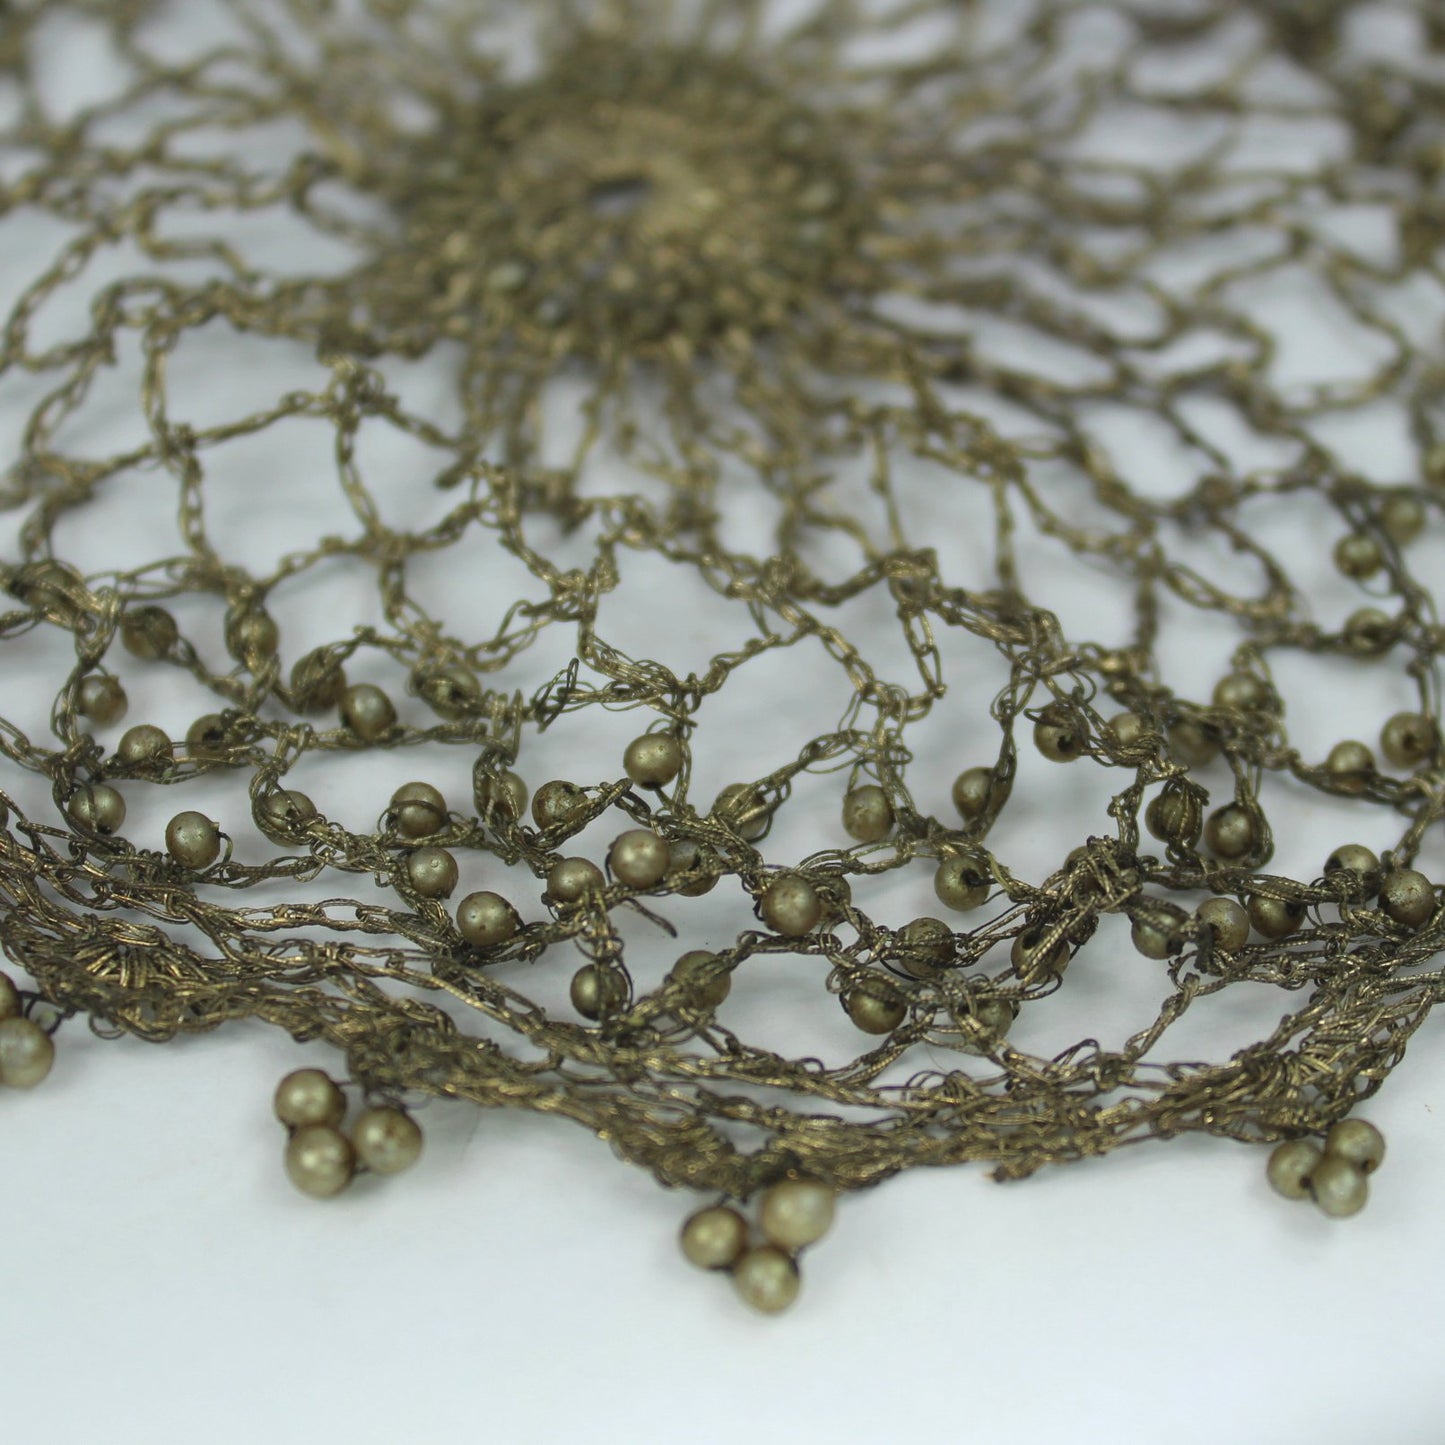 Exquisite Victorian Hair Chignon Snood Crochet Metallic Thread Pearls Rosewood Box closeup of crochet